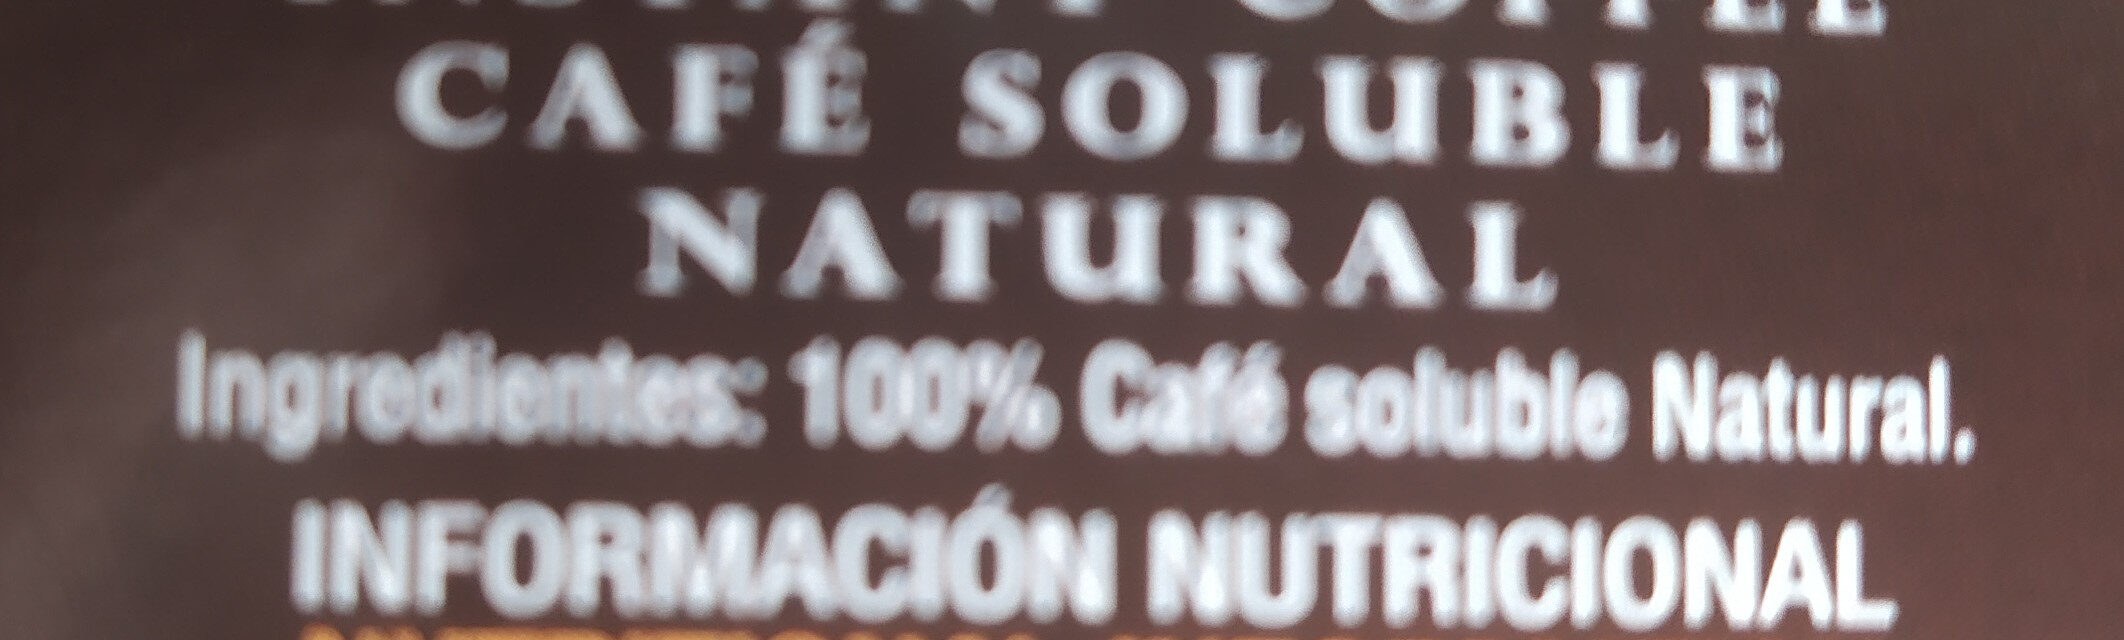 Café soluble natural Diario - Ingredients - es